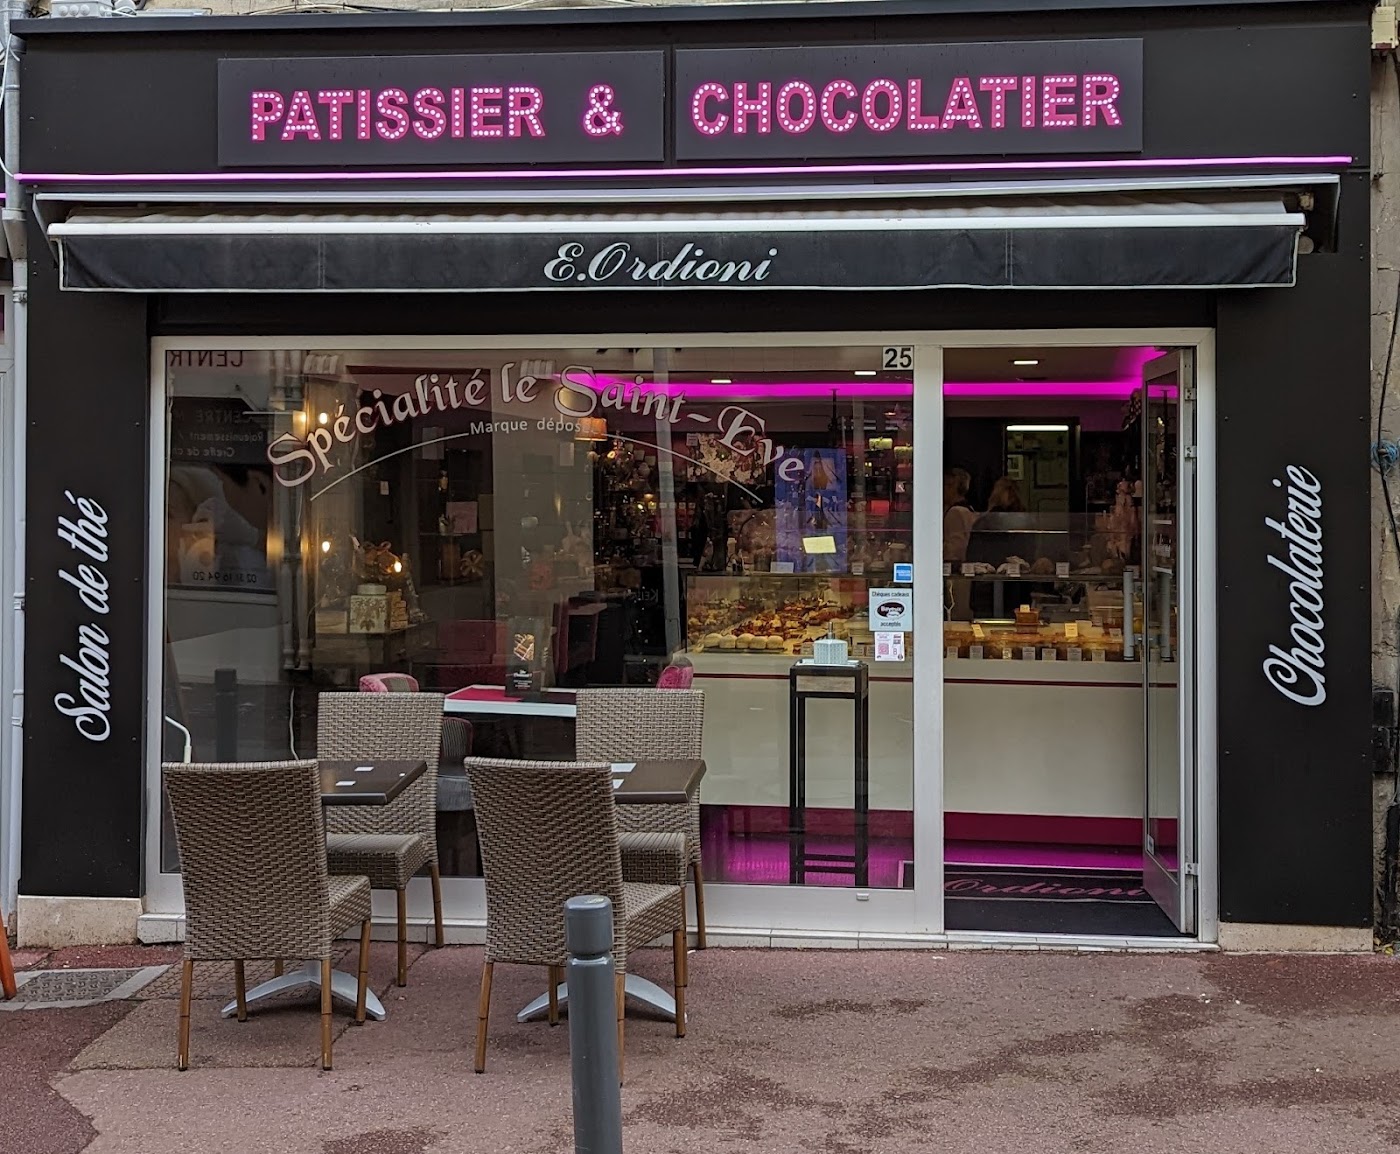 Pâtissier & Chocolatier "E. Ordioni"